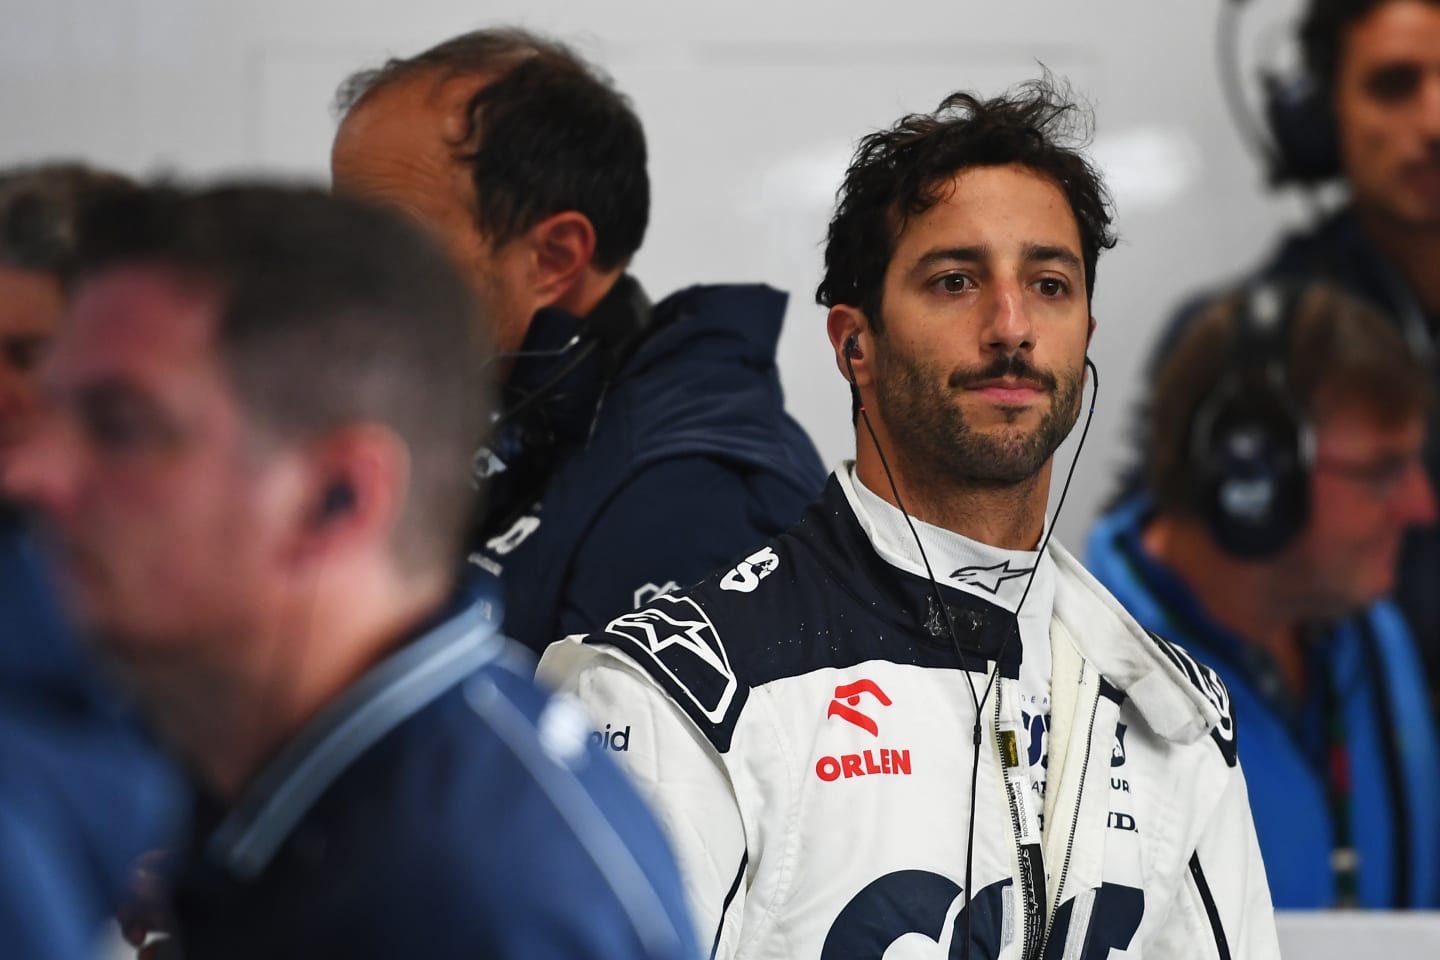 LAS VEGAS, NEVADA - NOVEMBER 18: Daniel Ricciardo of Australia and Scuderia AlphaTauri looks on in